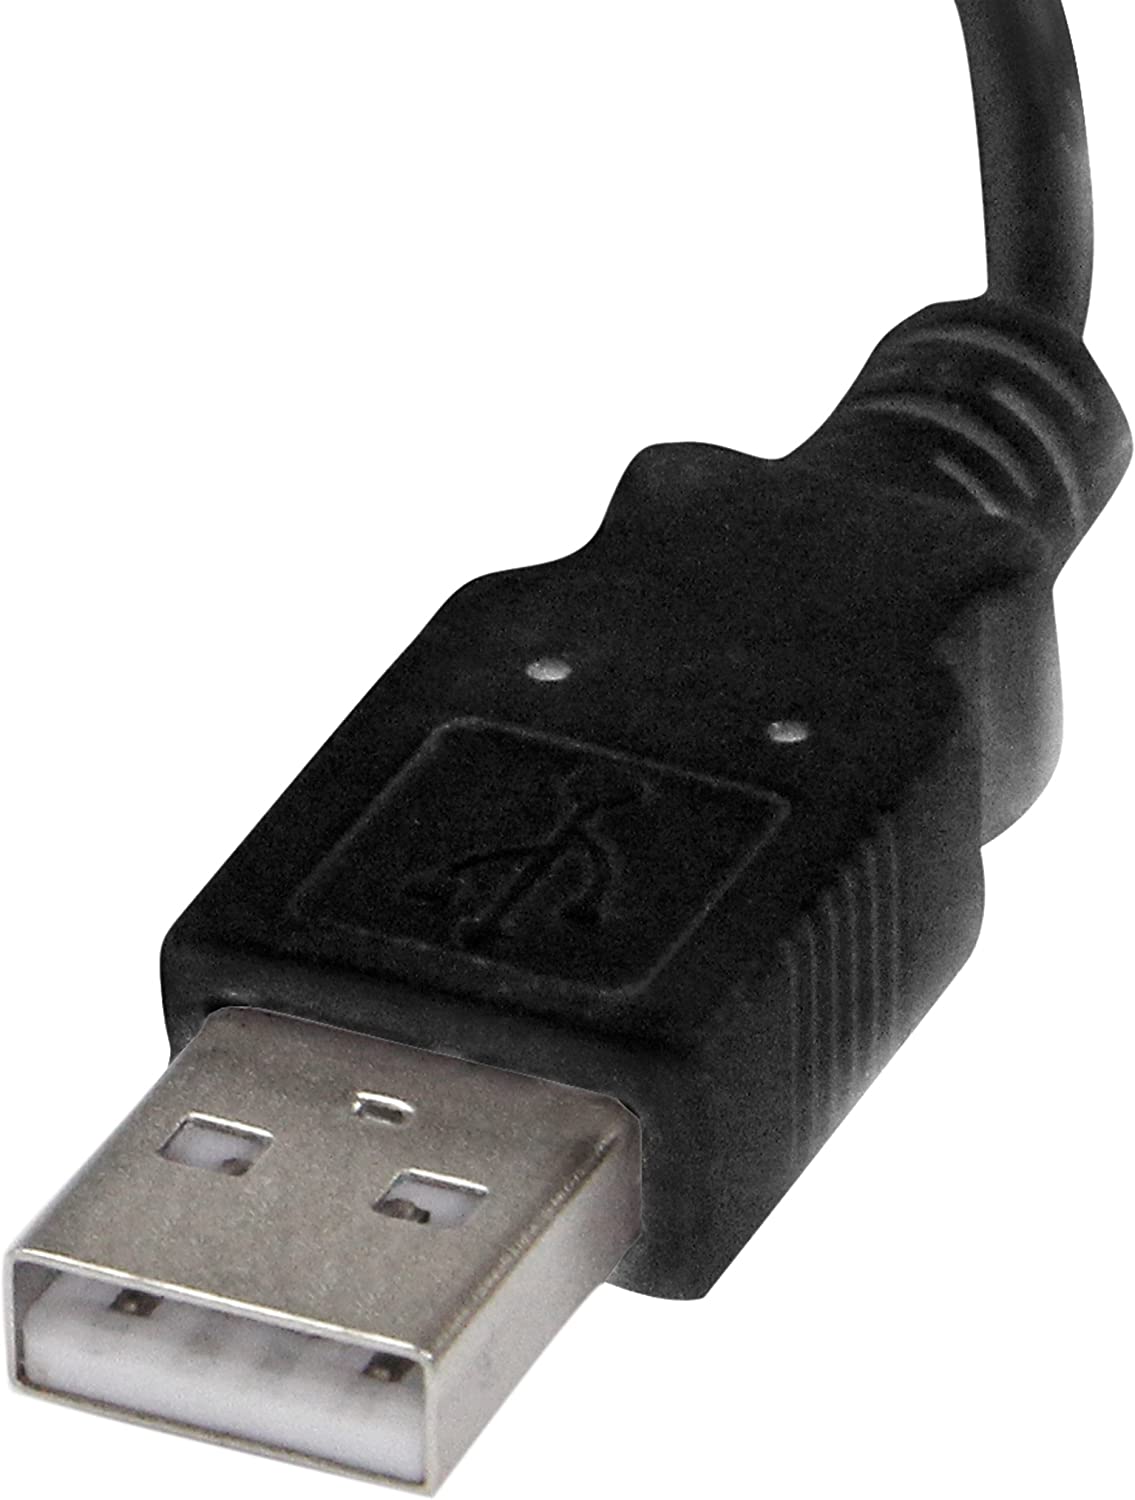 StarTech.com USB 2.0 Fax Modem - 56K External Hardware Dial Up V.92 Modem/ Dongle/Adapter - Computer/Laptop Fax Modem - USB to Telephone Jack - USB Data Modem - Network Fax/CMR/POS (USB56KEMH2)